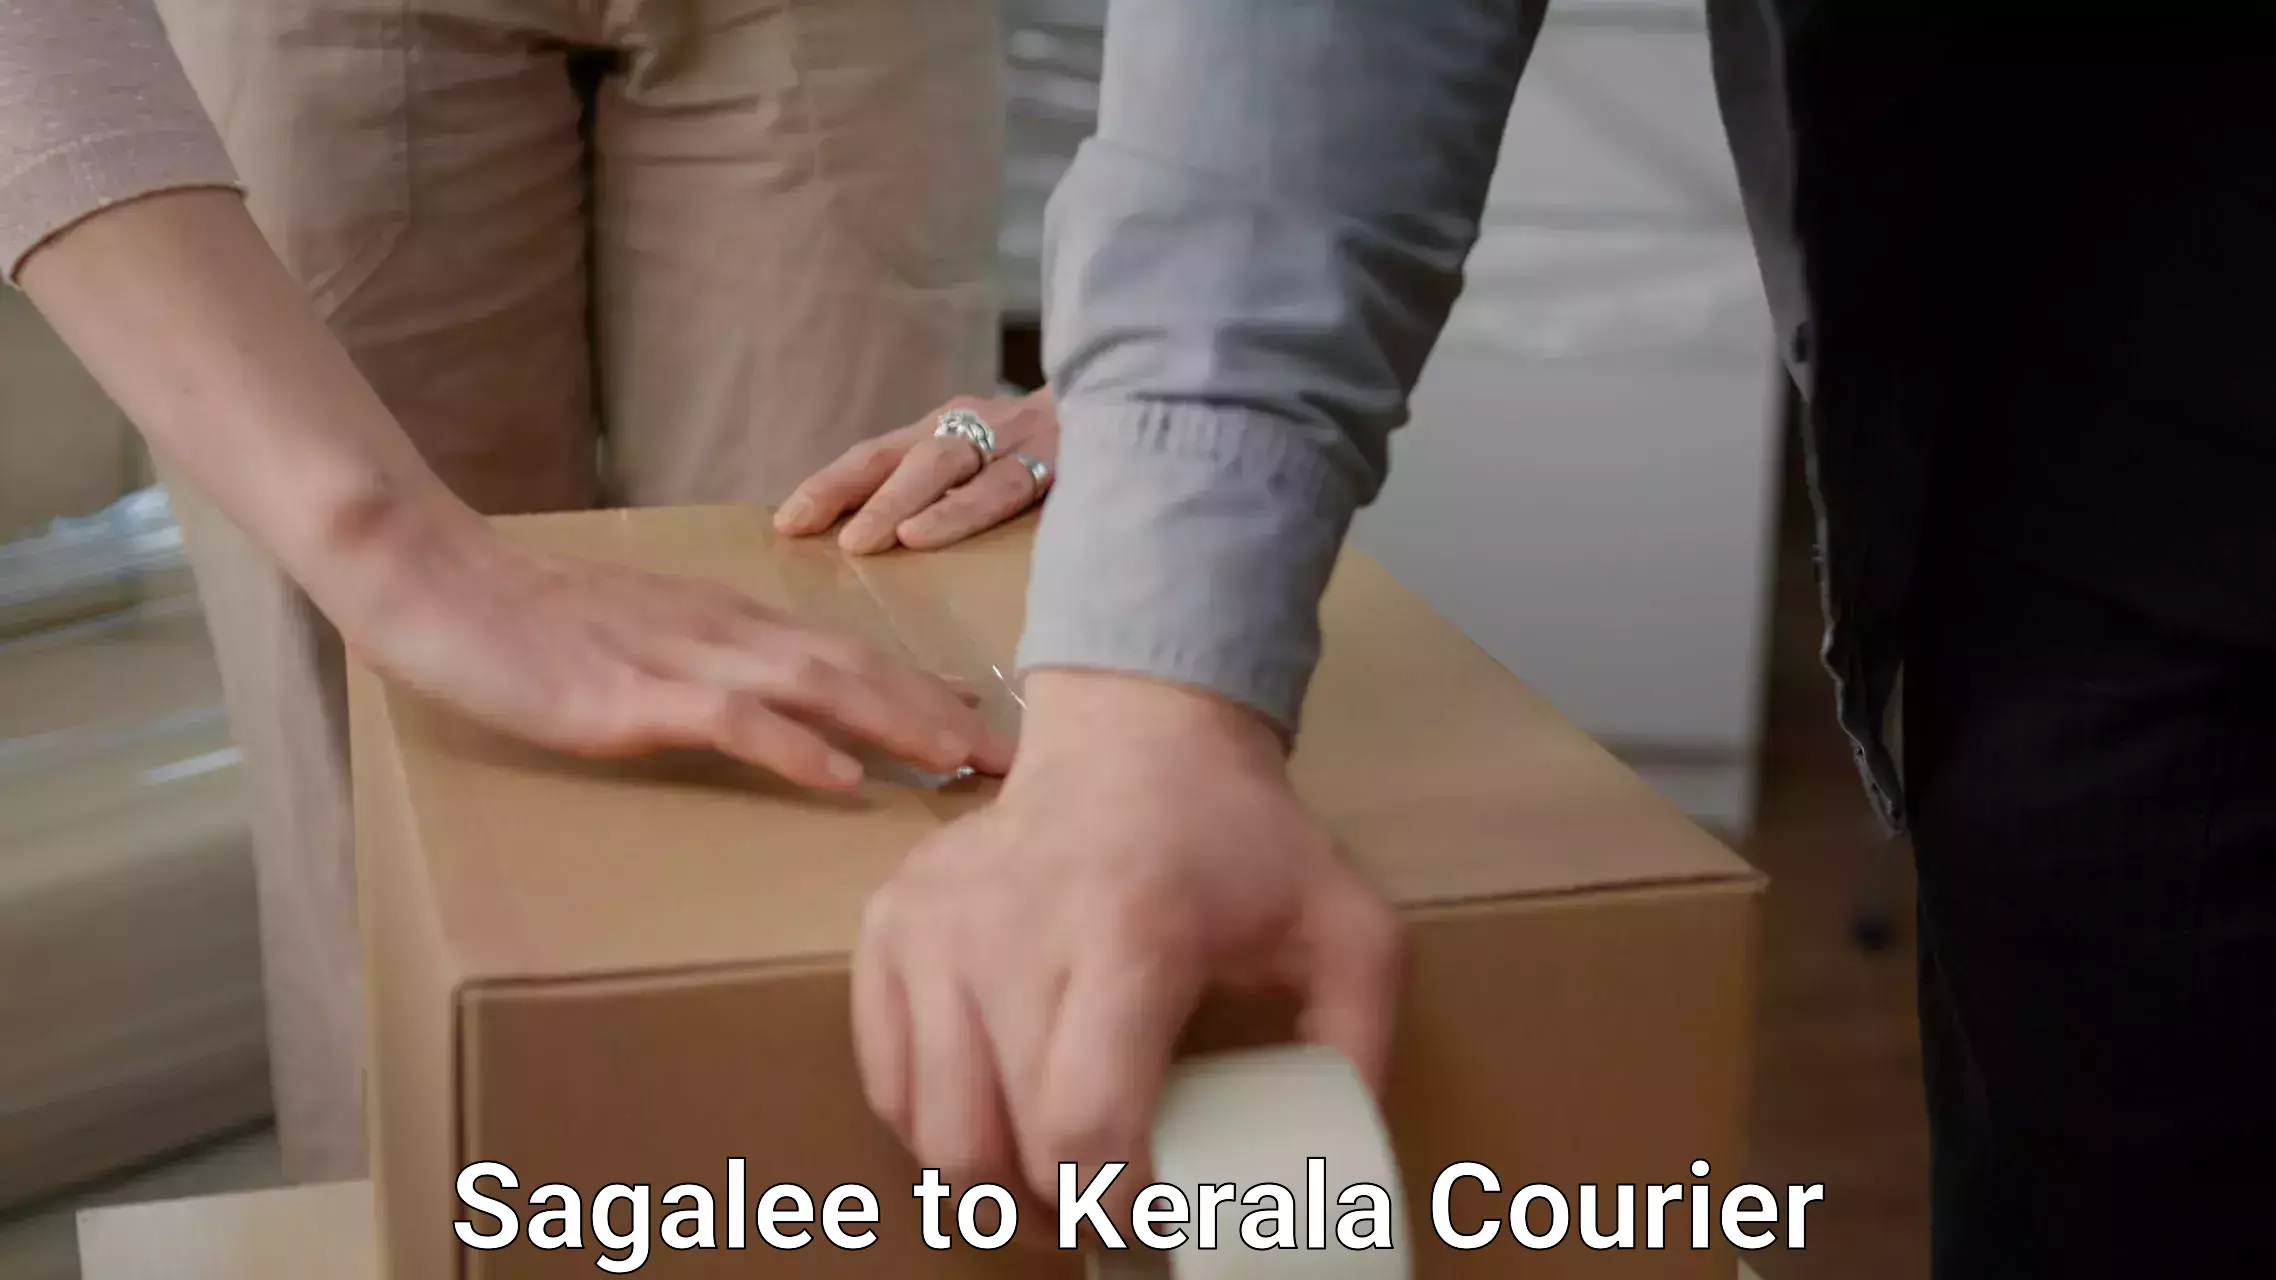 Professional furniture movers Sagalee to Kerala